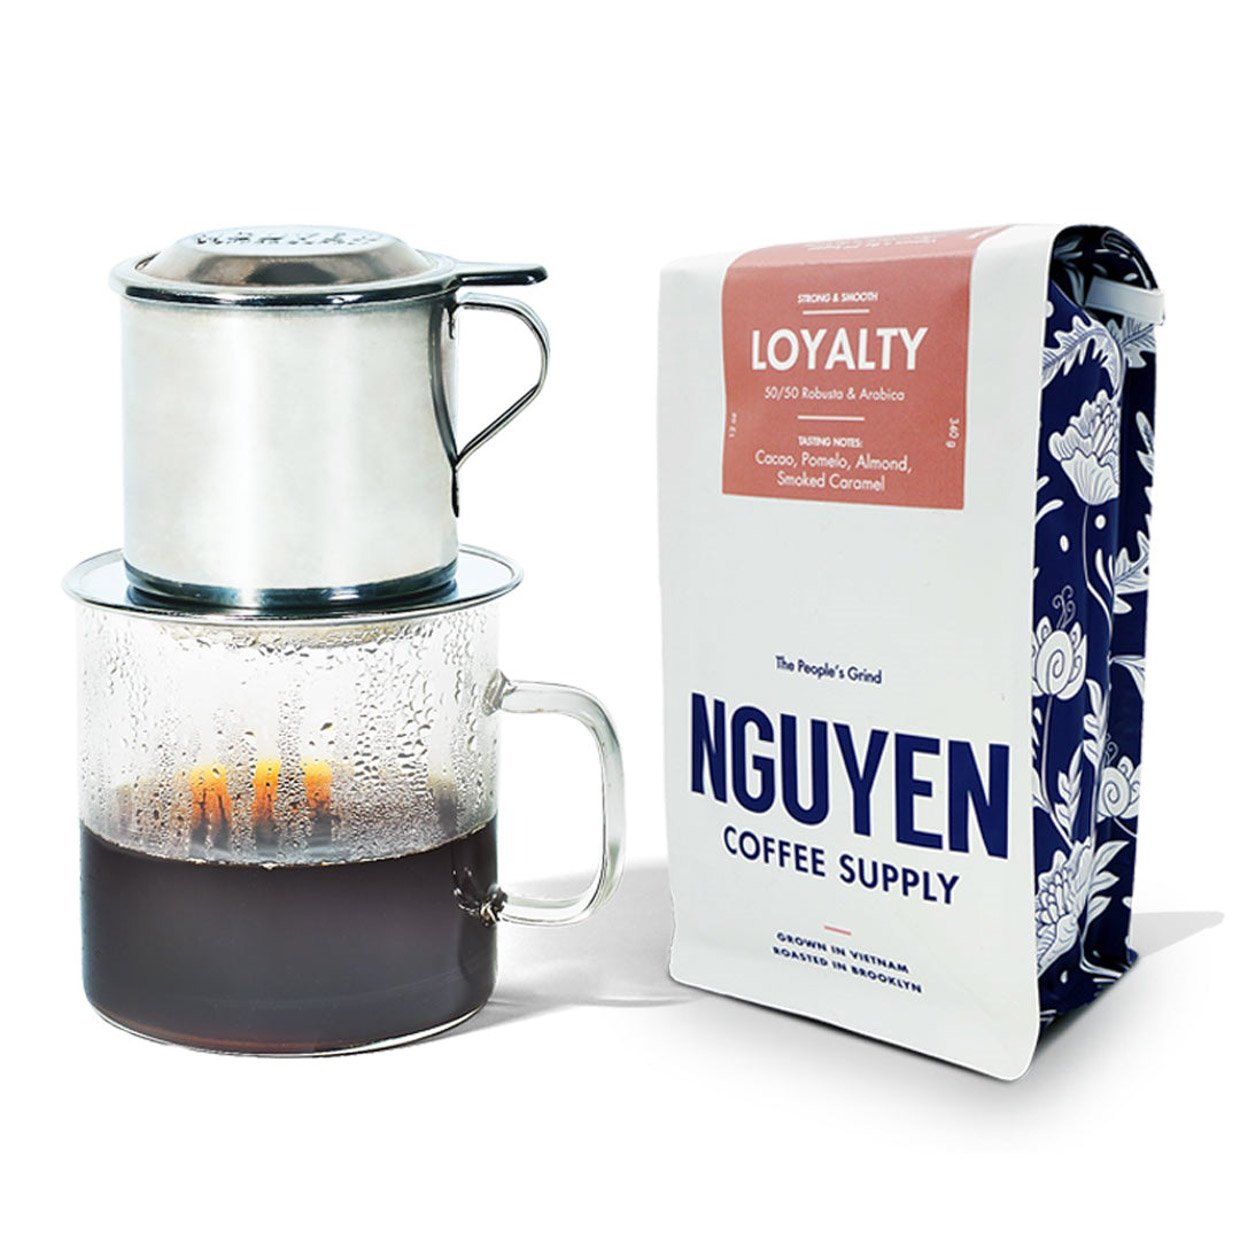 Nguyen Coffee Supply’s Original Phin Kit